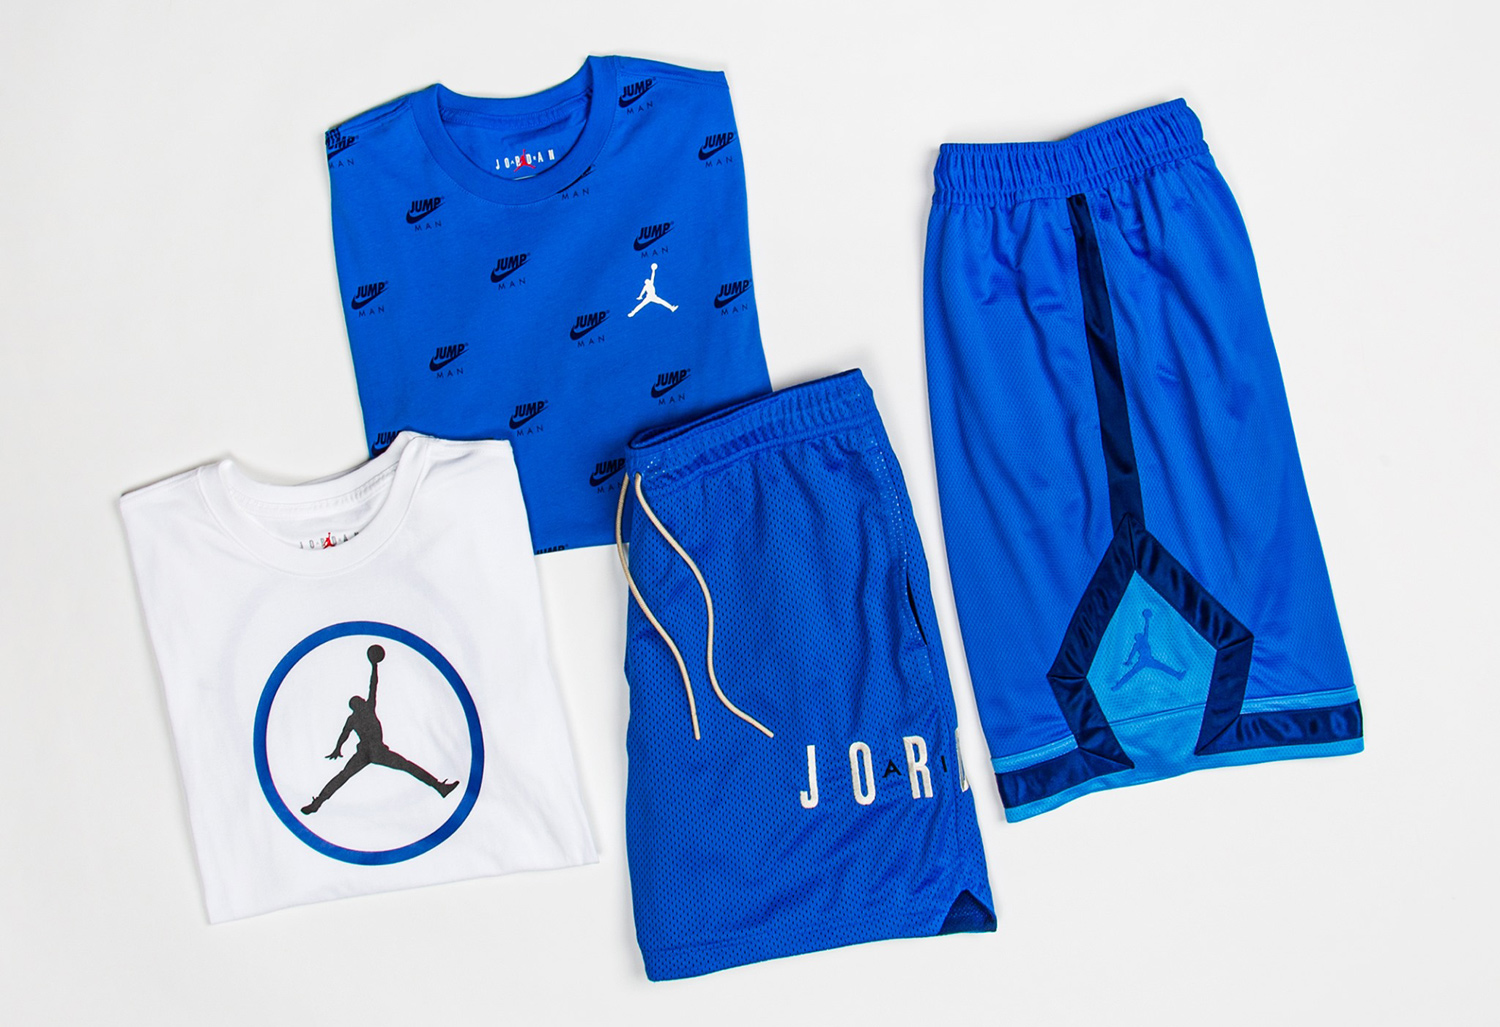 jordan-royal-blue-clothing